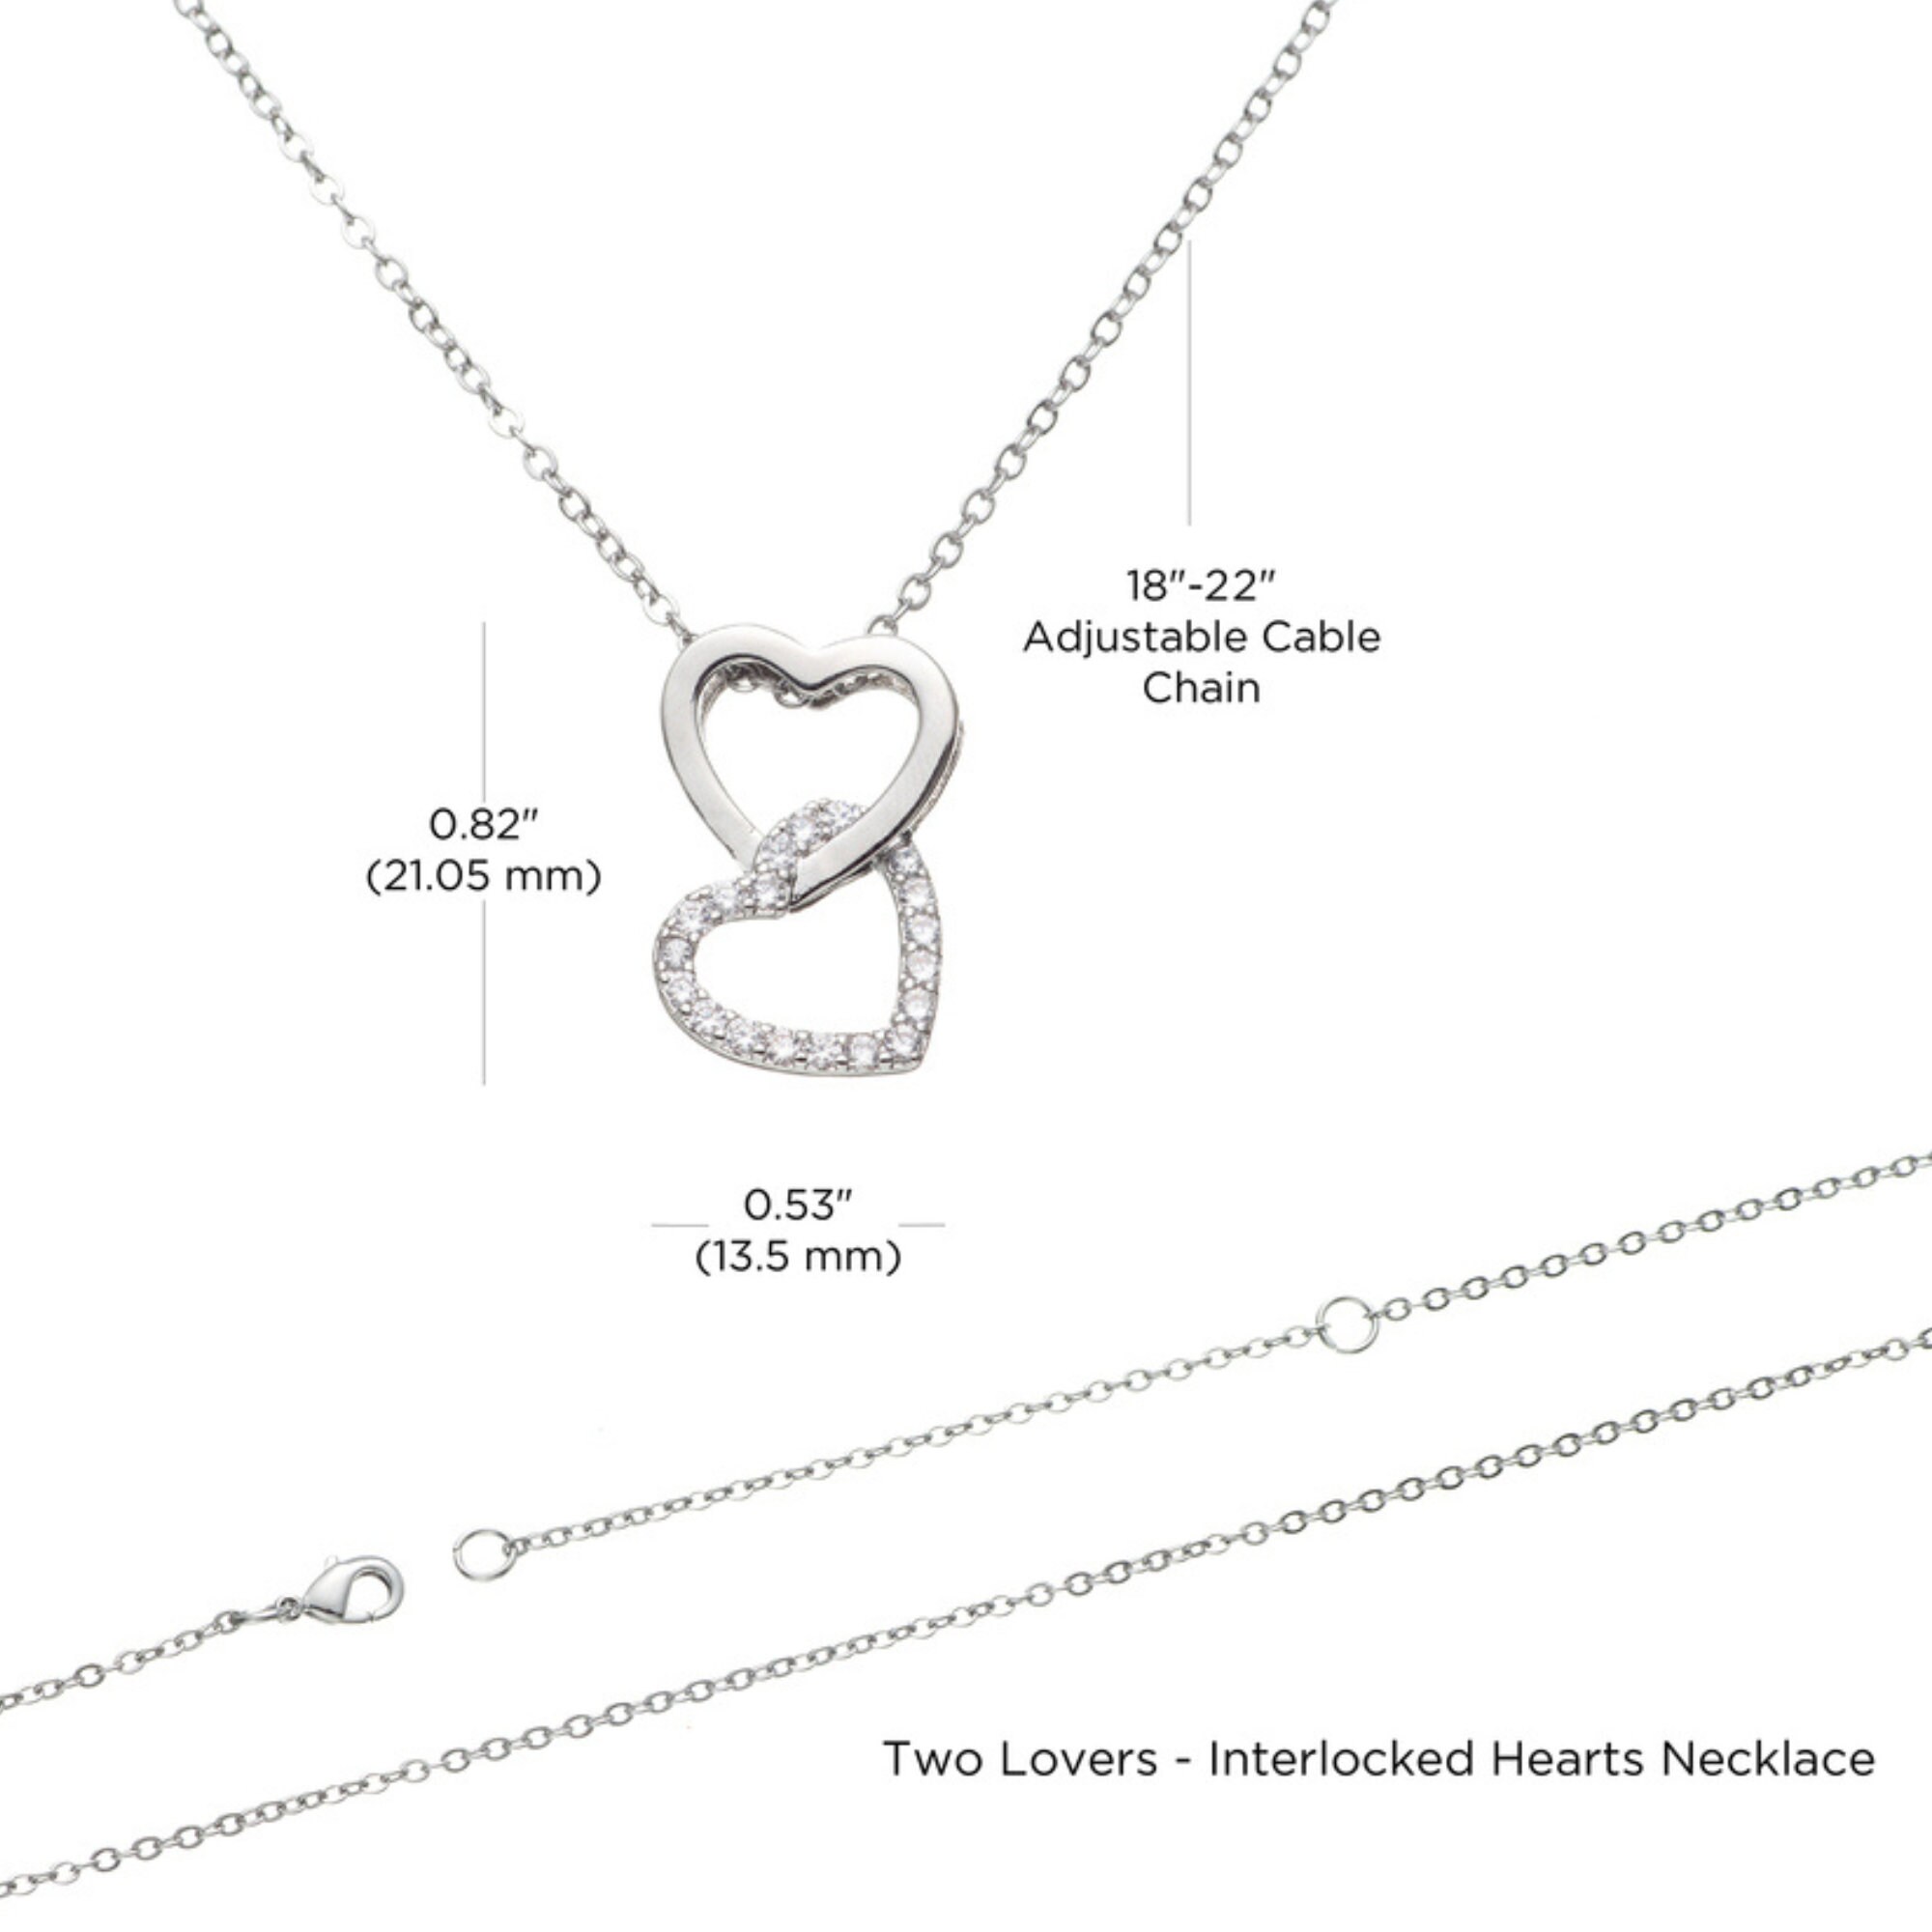 Message Card Jewelryinterlocked Hearts Necklace Message - Etsy